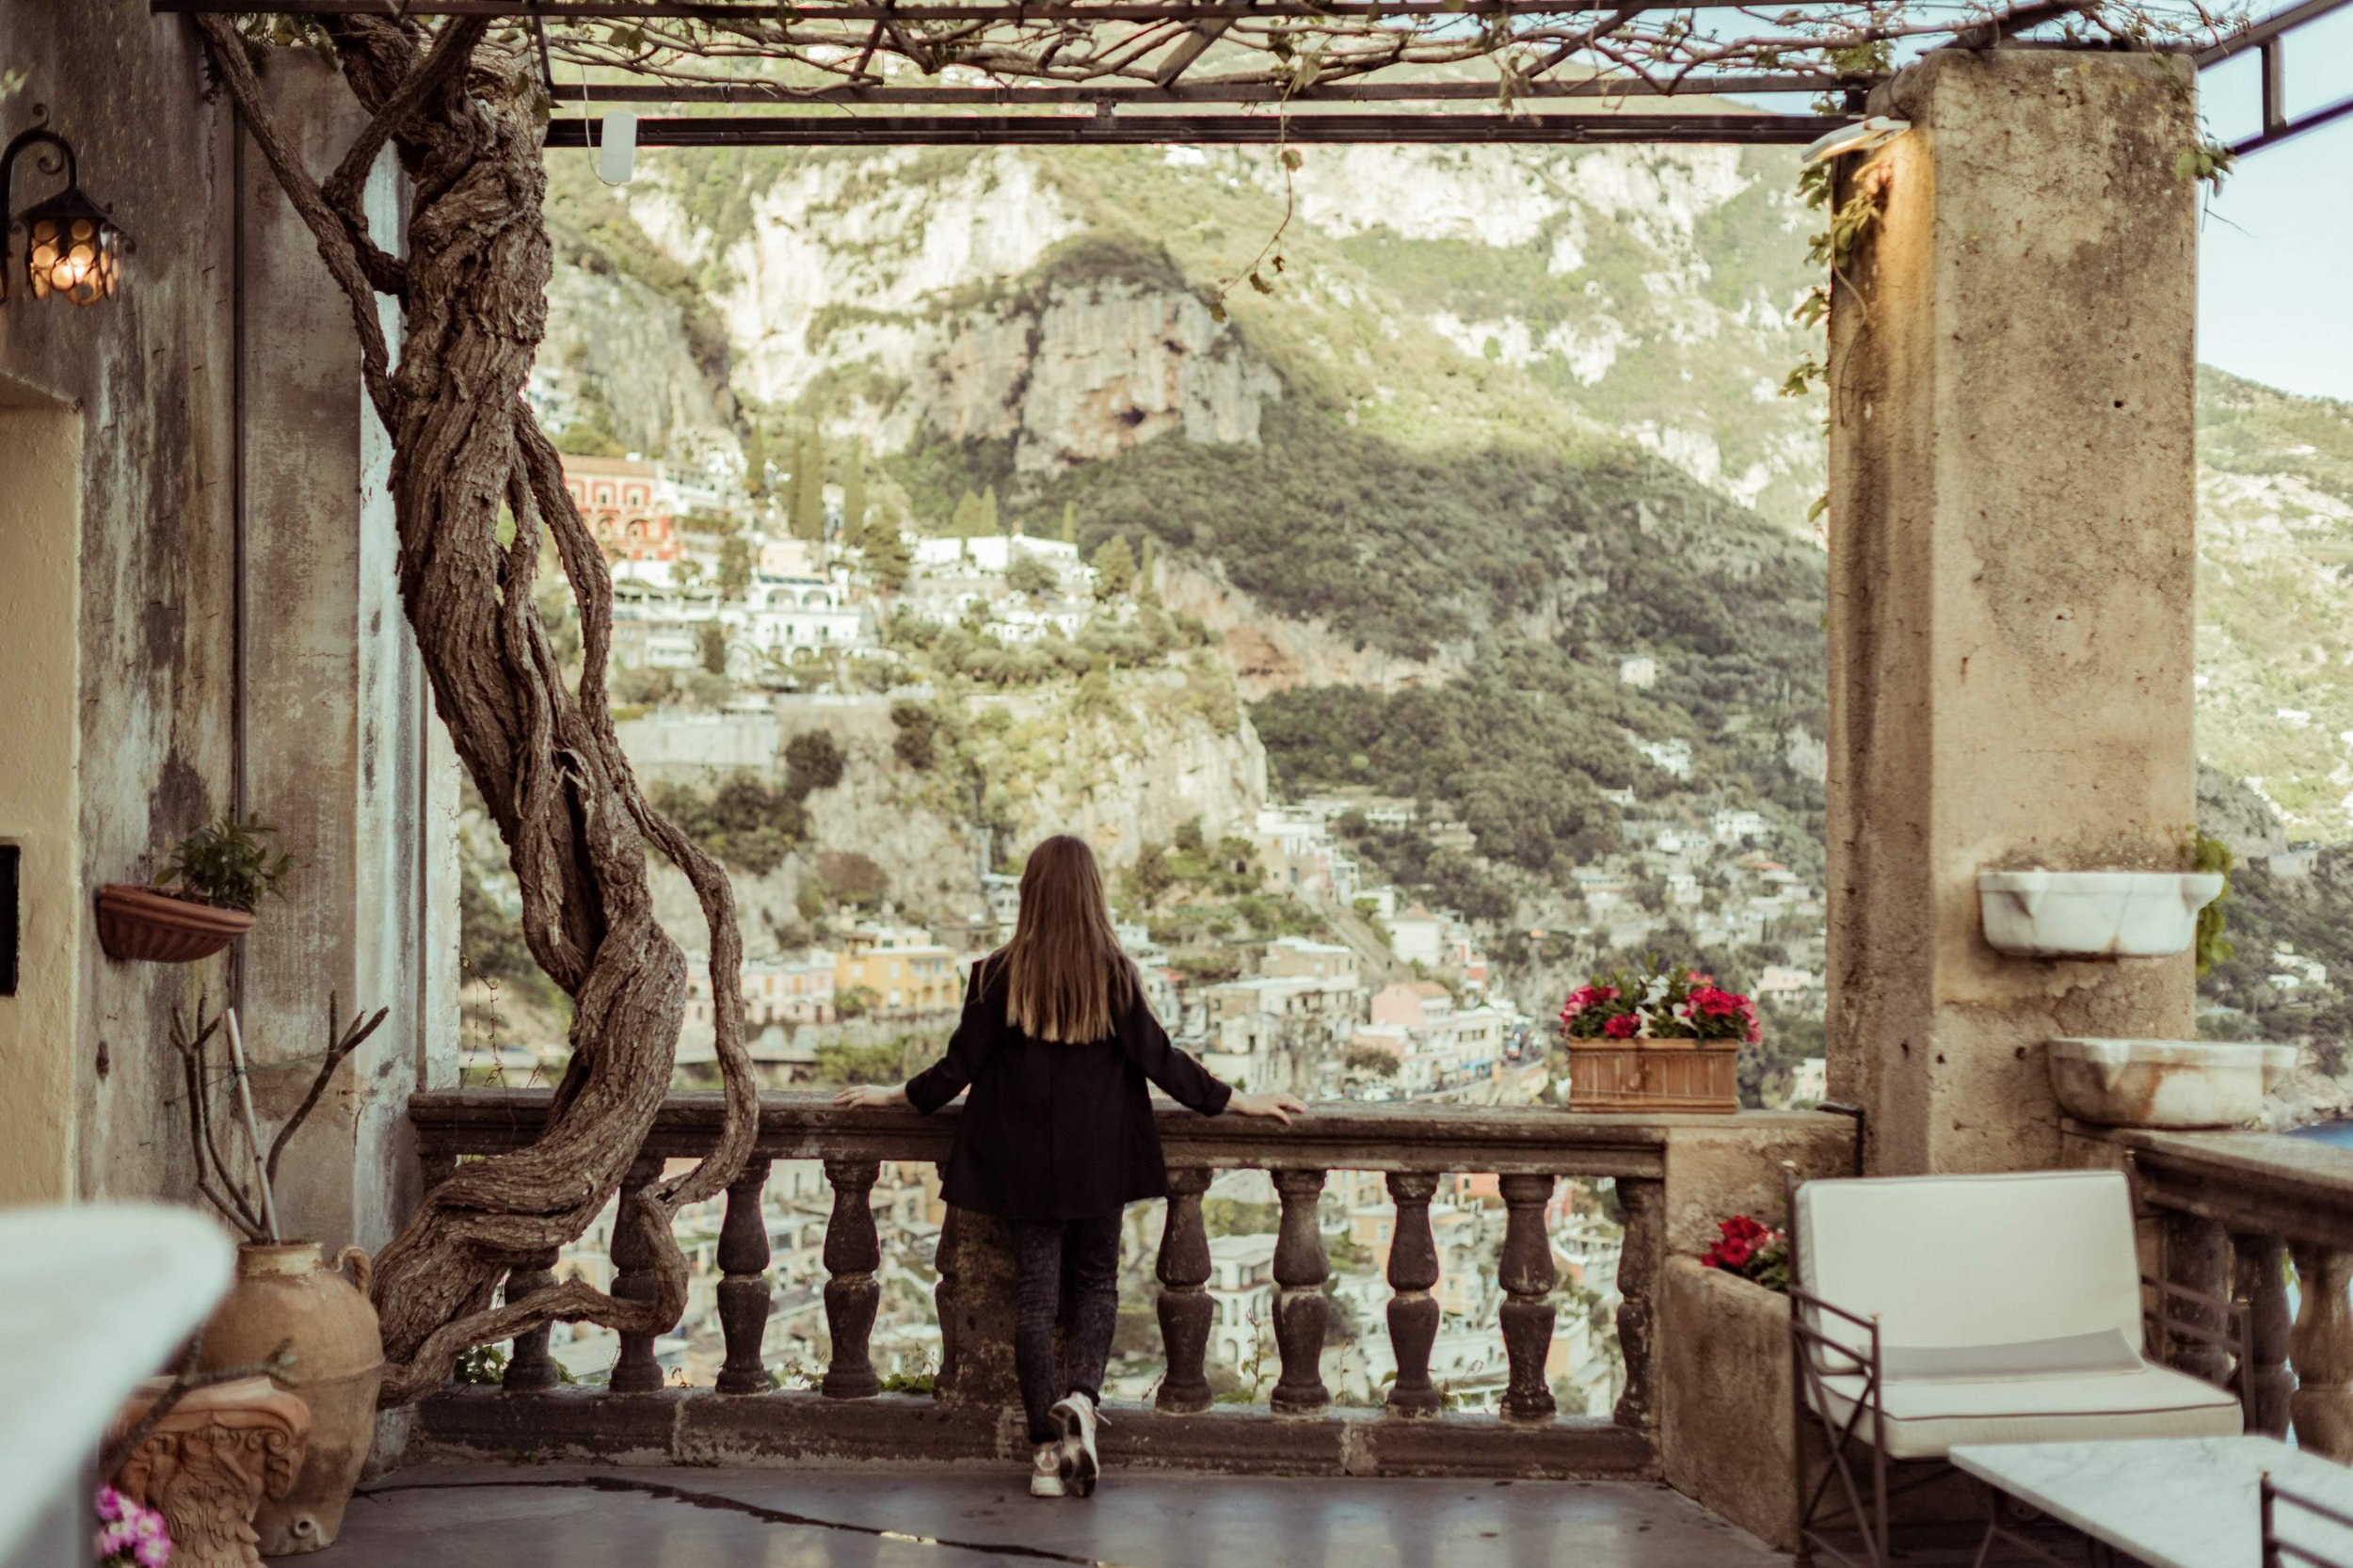 Portrait of female in Positano, Italy by Photographer Jack Robert